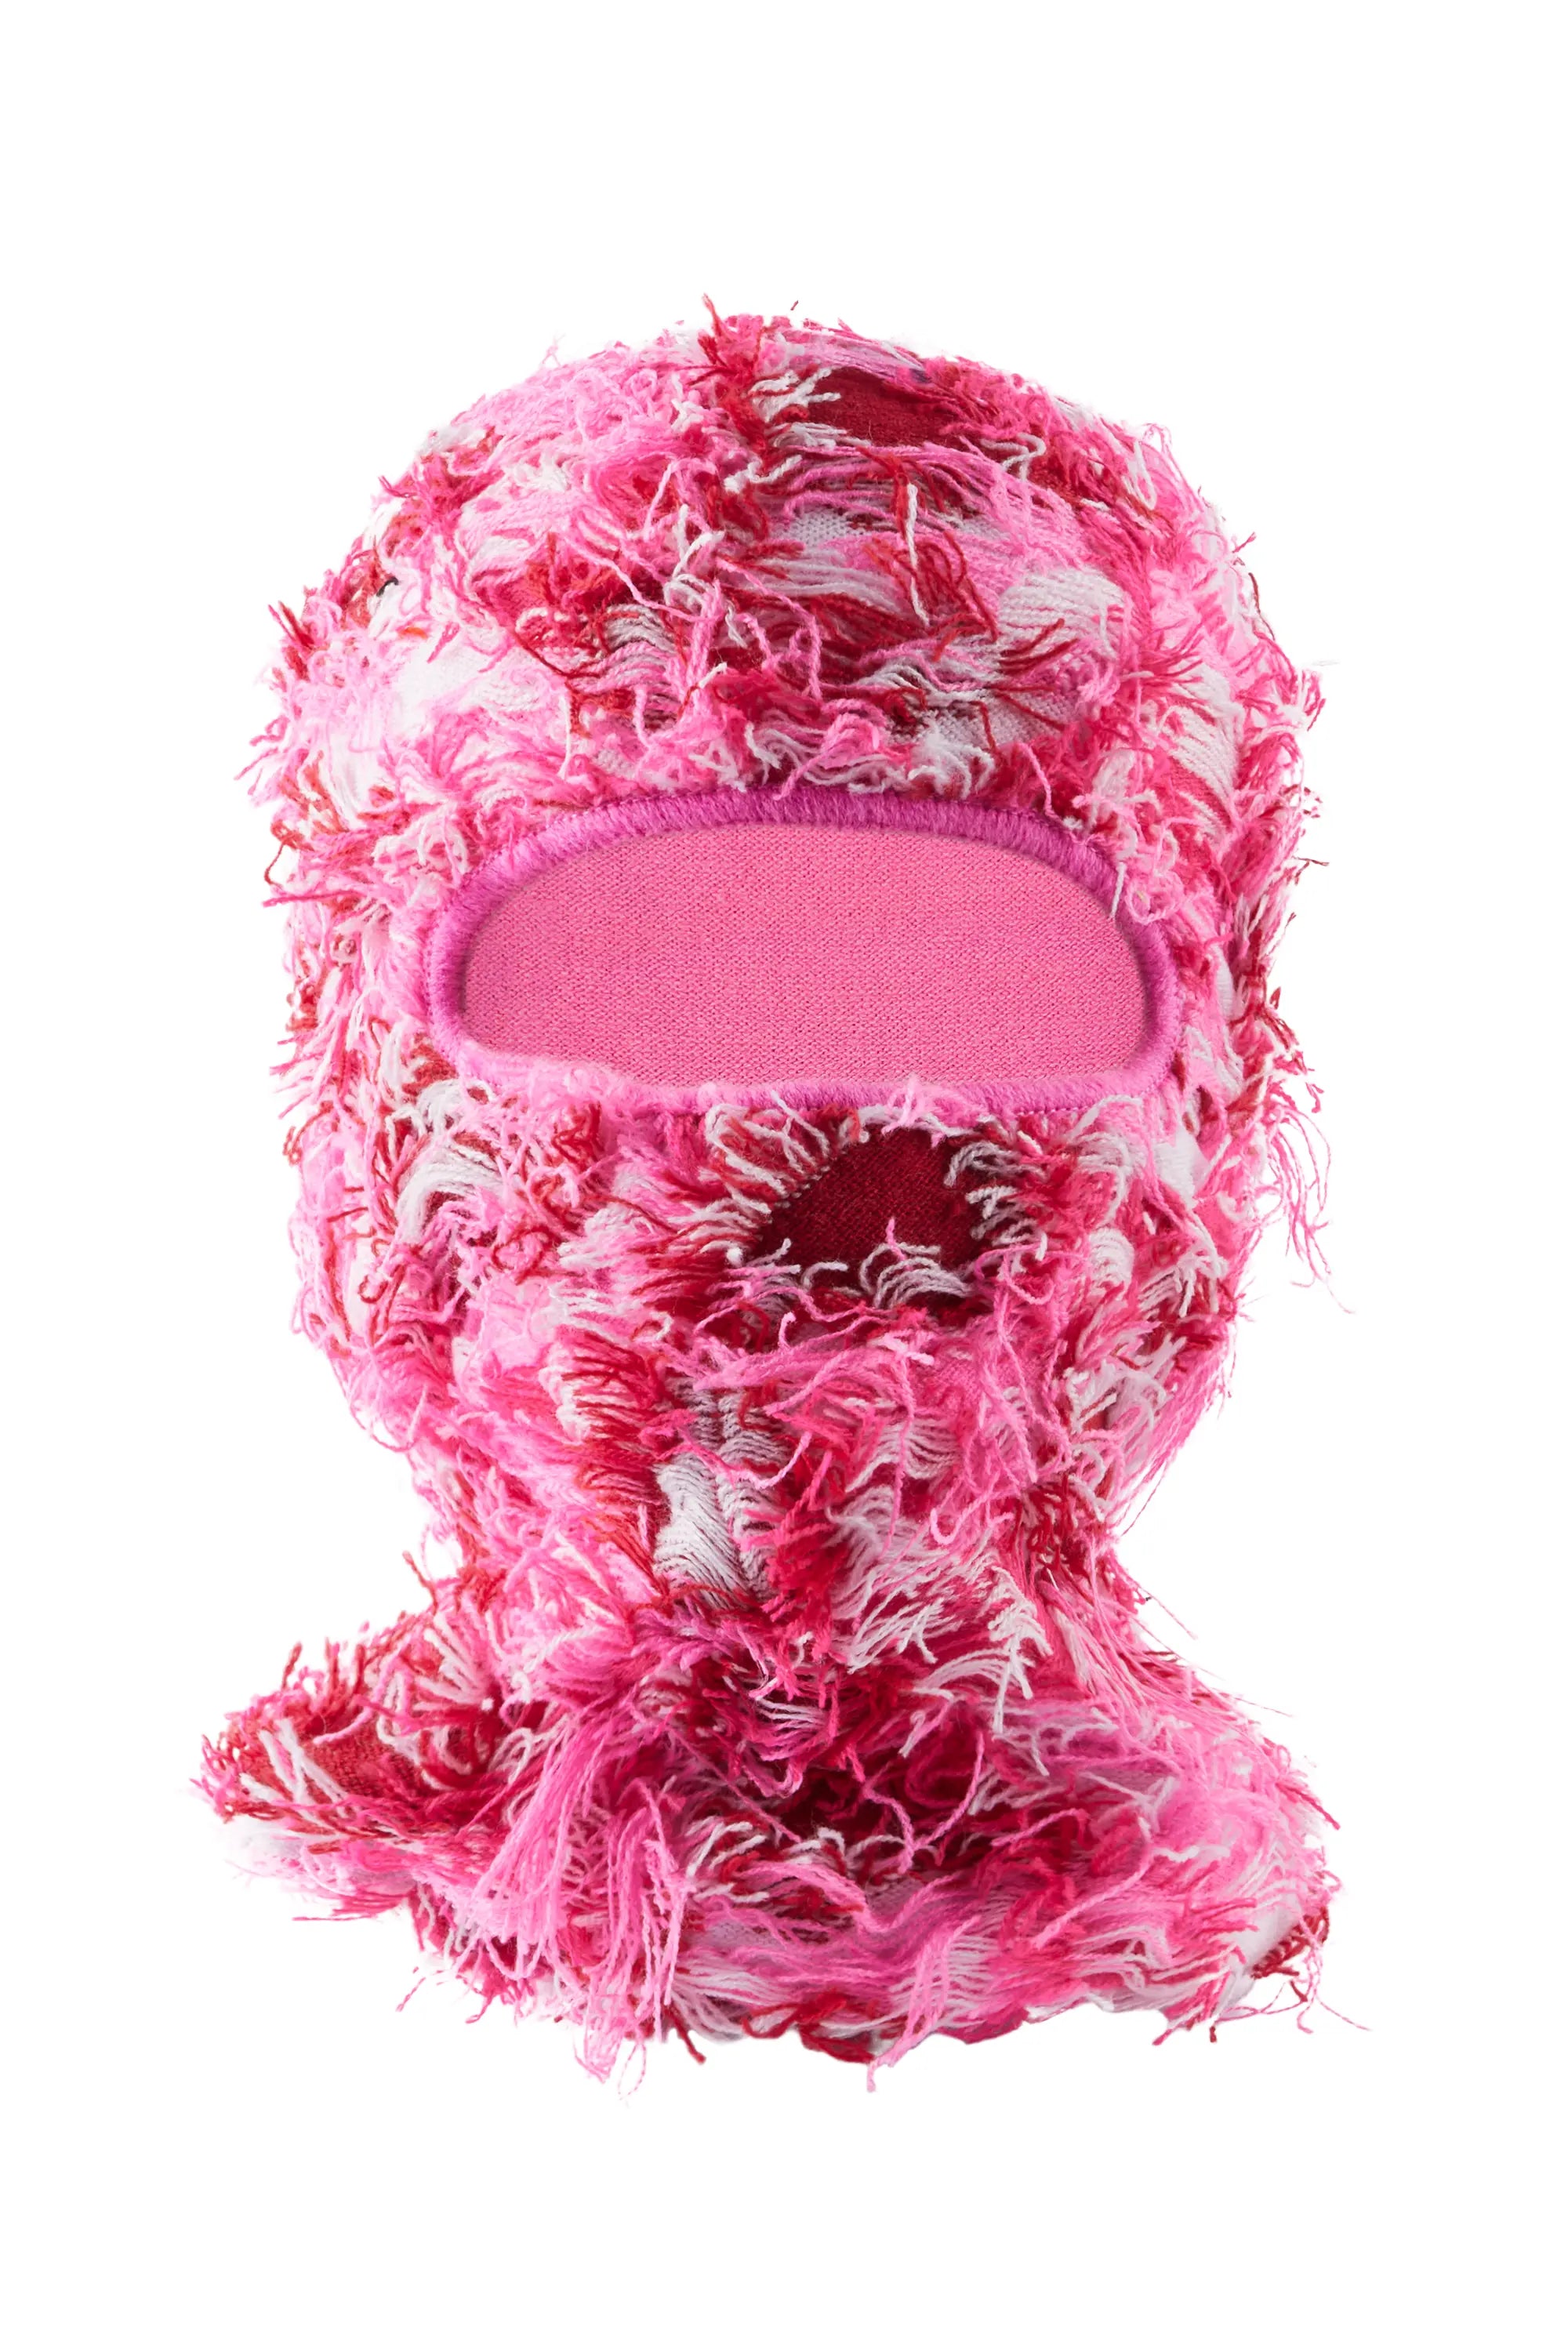 Boys Otto Pink Fuzzy Ski Mask